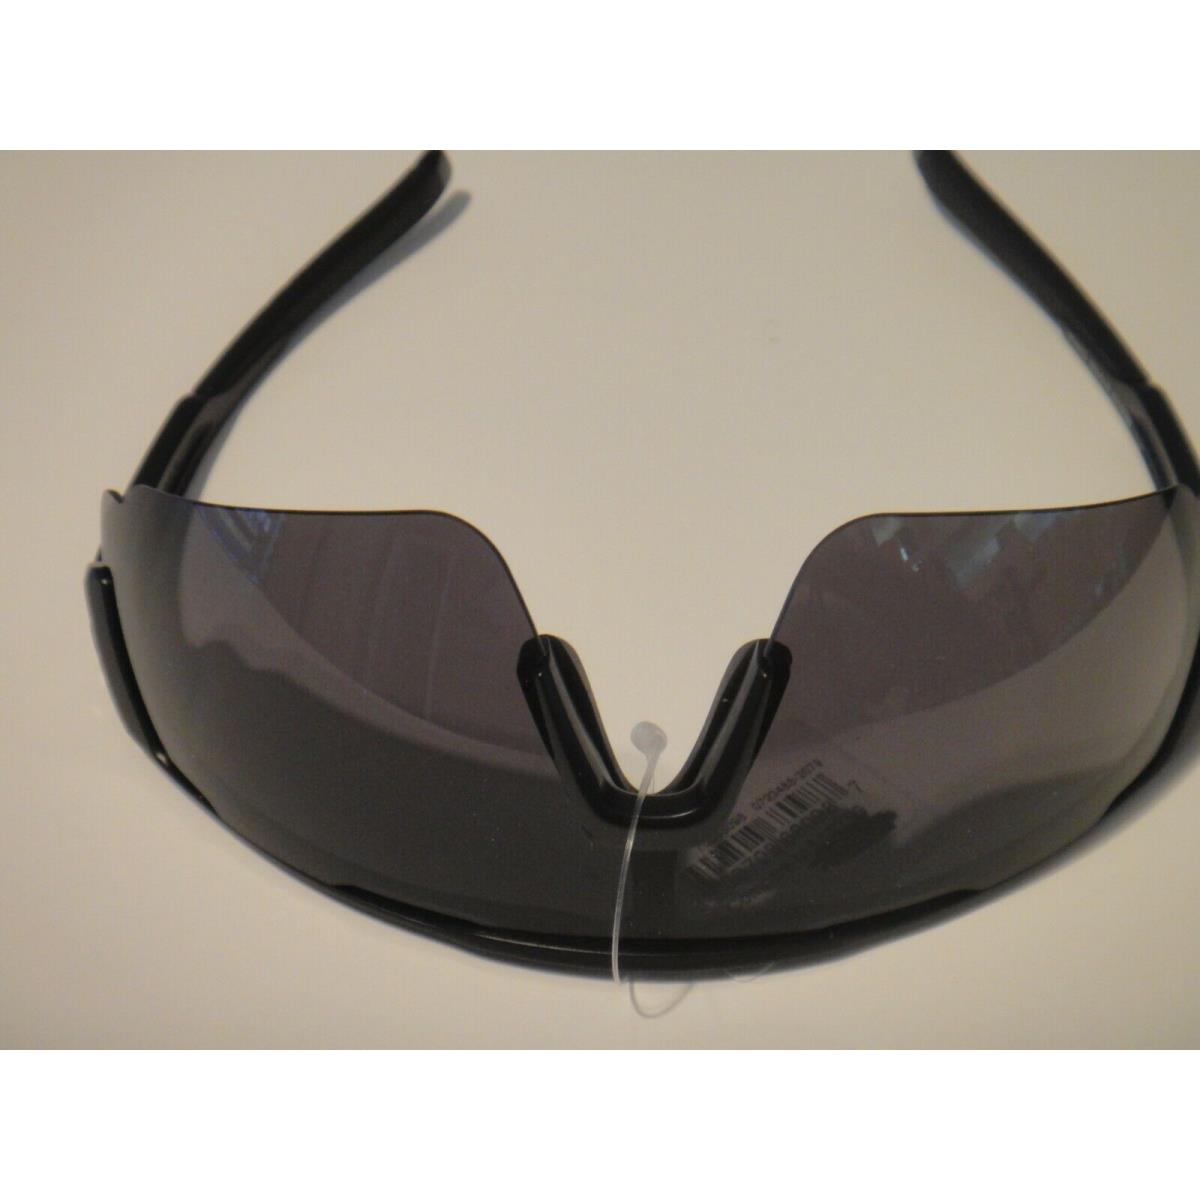 Under Armour sunglasses  - Black Frame 6